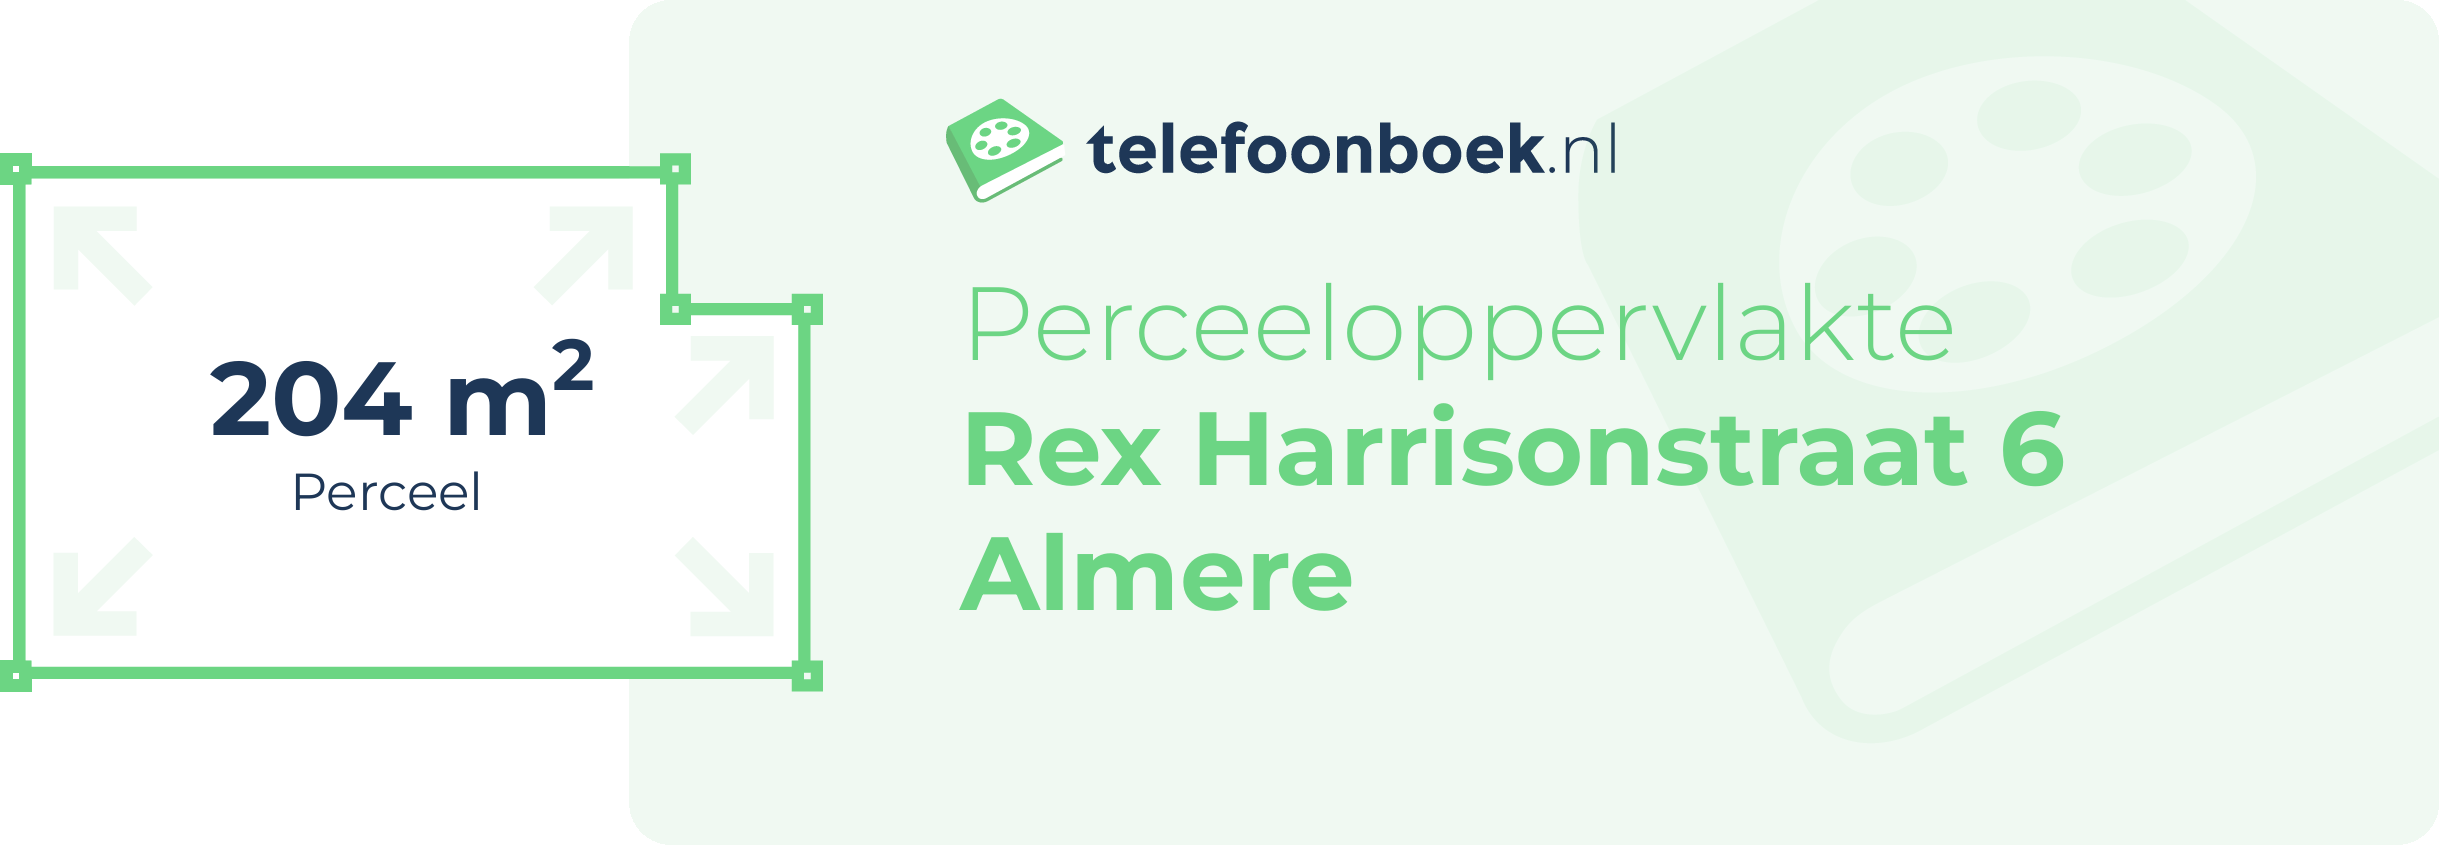 Perceeloppervlakte Rex Harrisonstraat 6 Almere